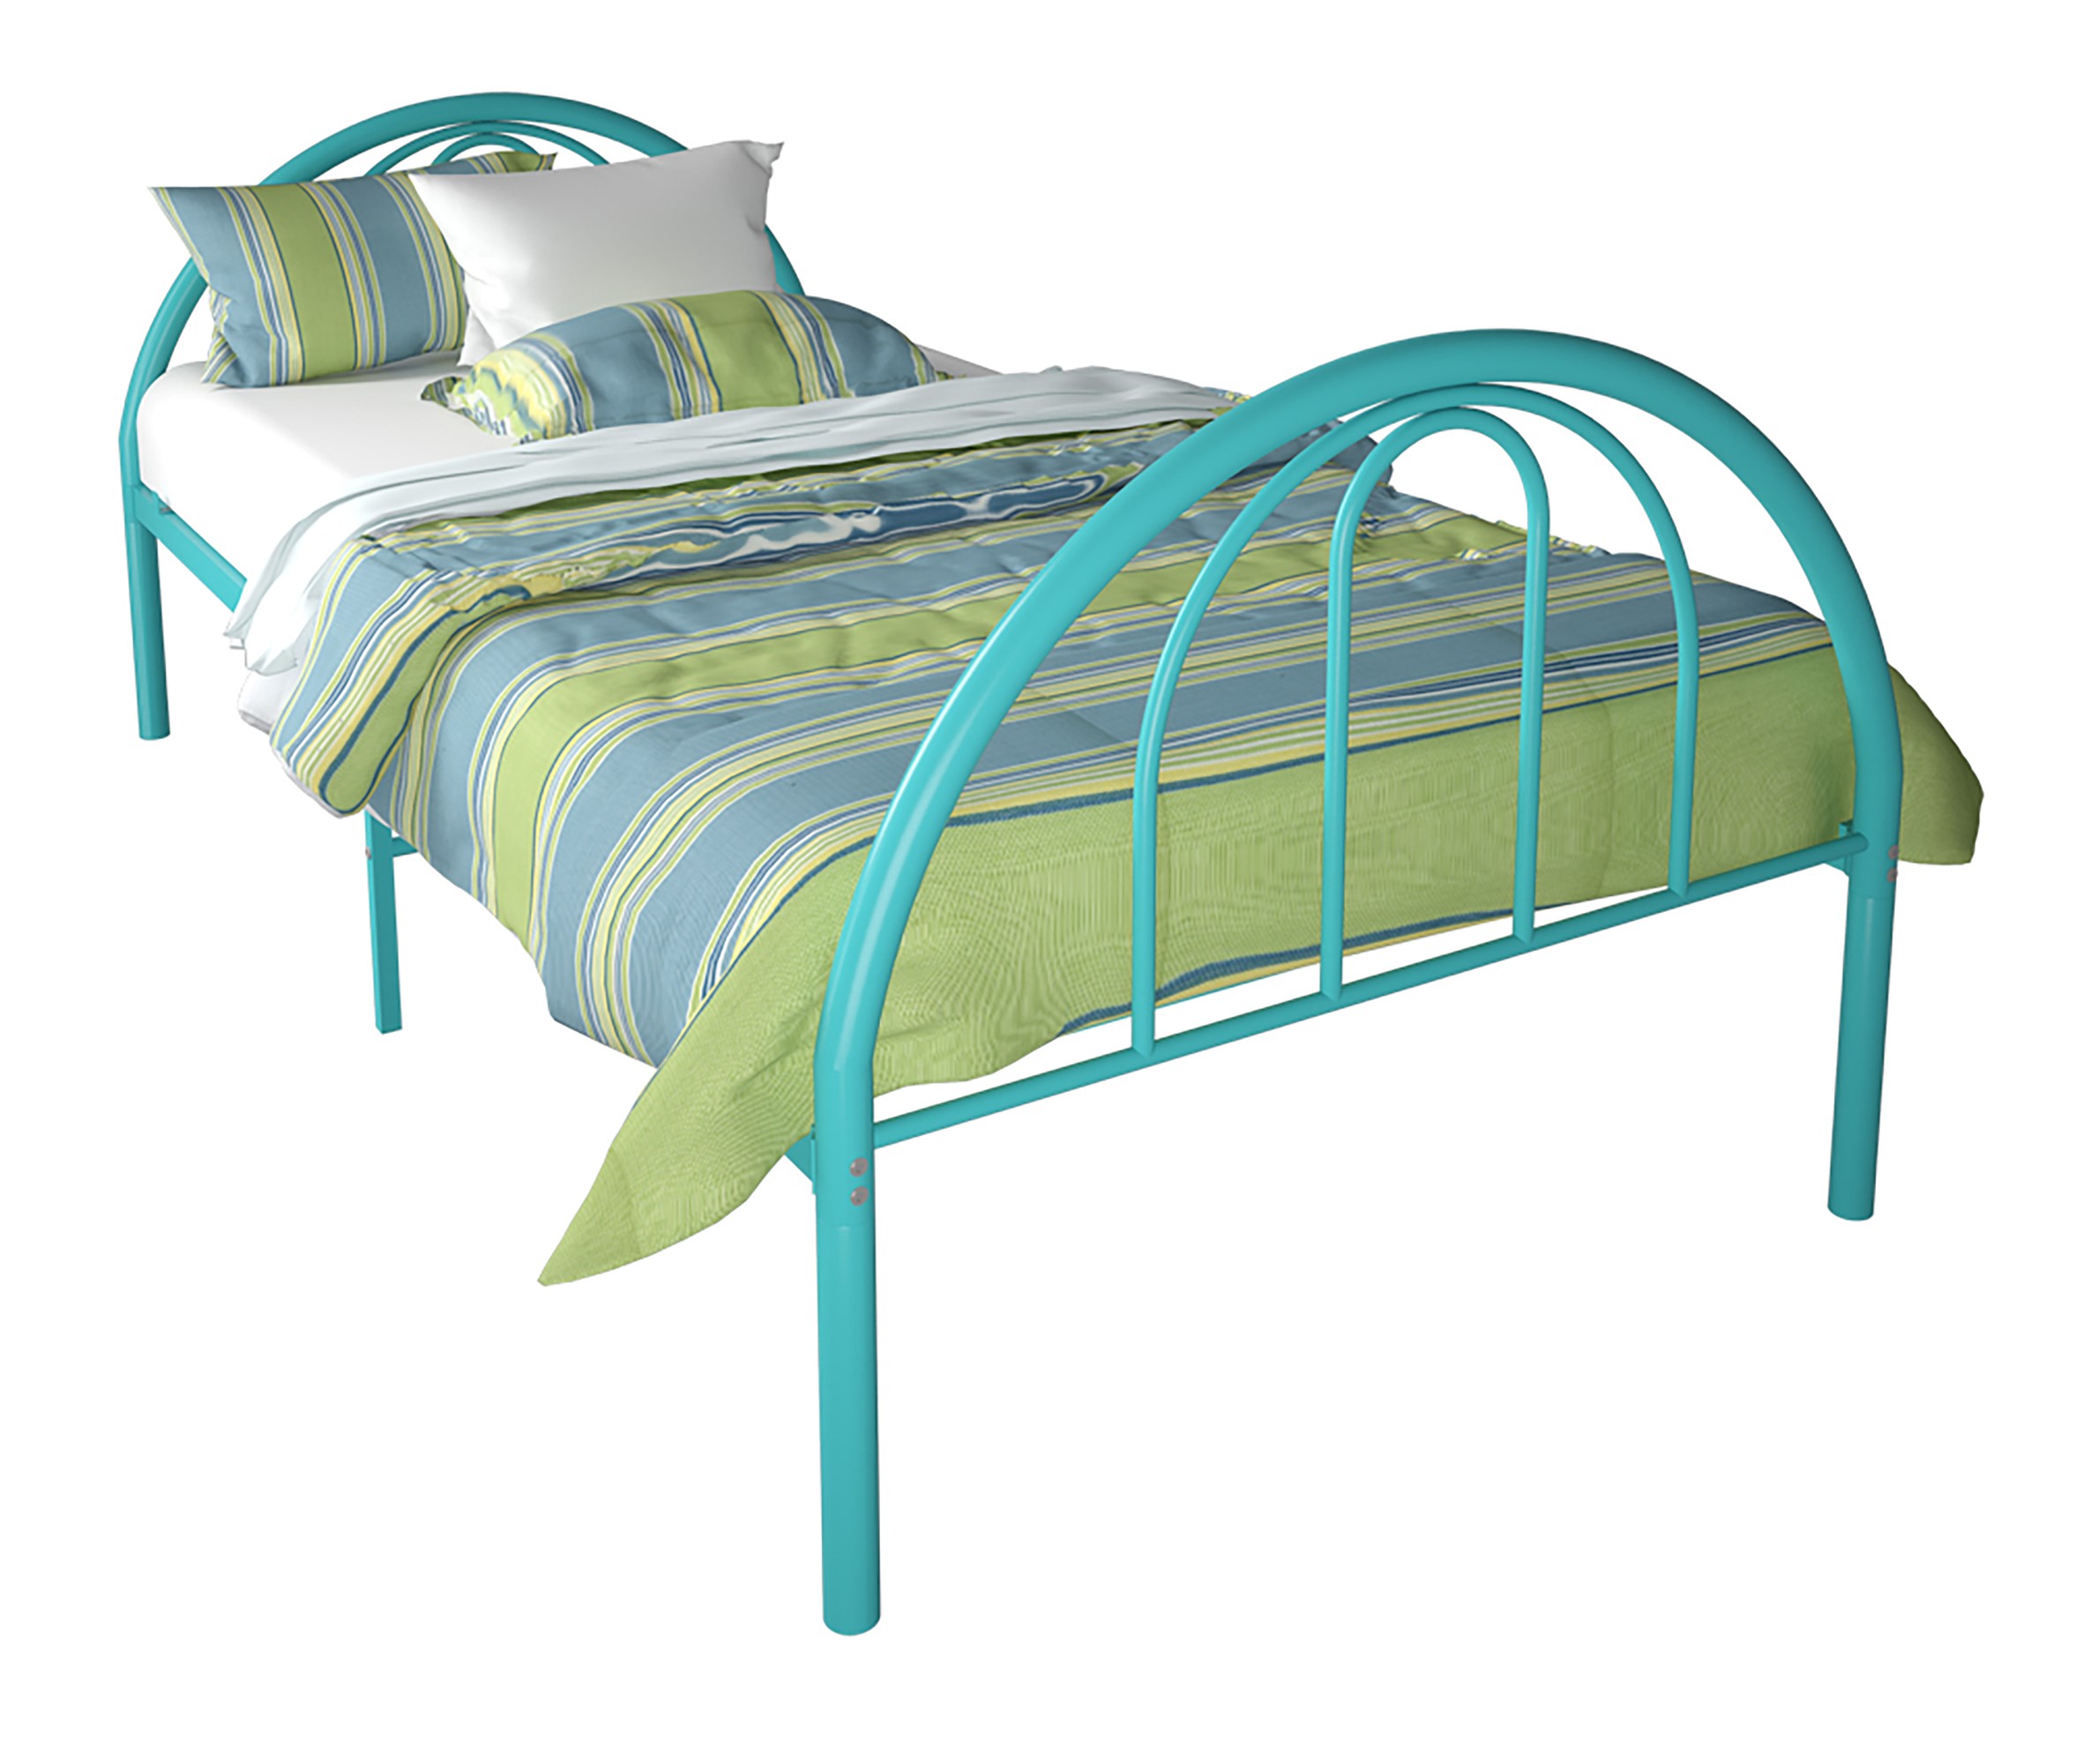 BK Furniture Brooklyn Classic Metal Bed, Twin, Turquoise - image 2 of 5